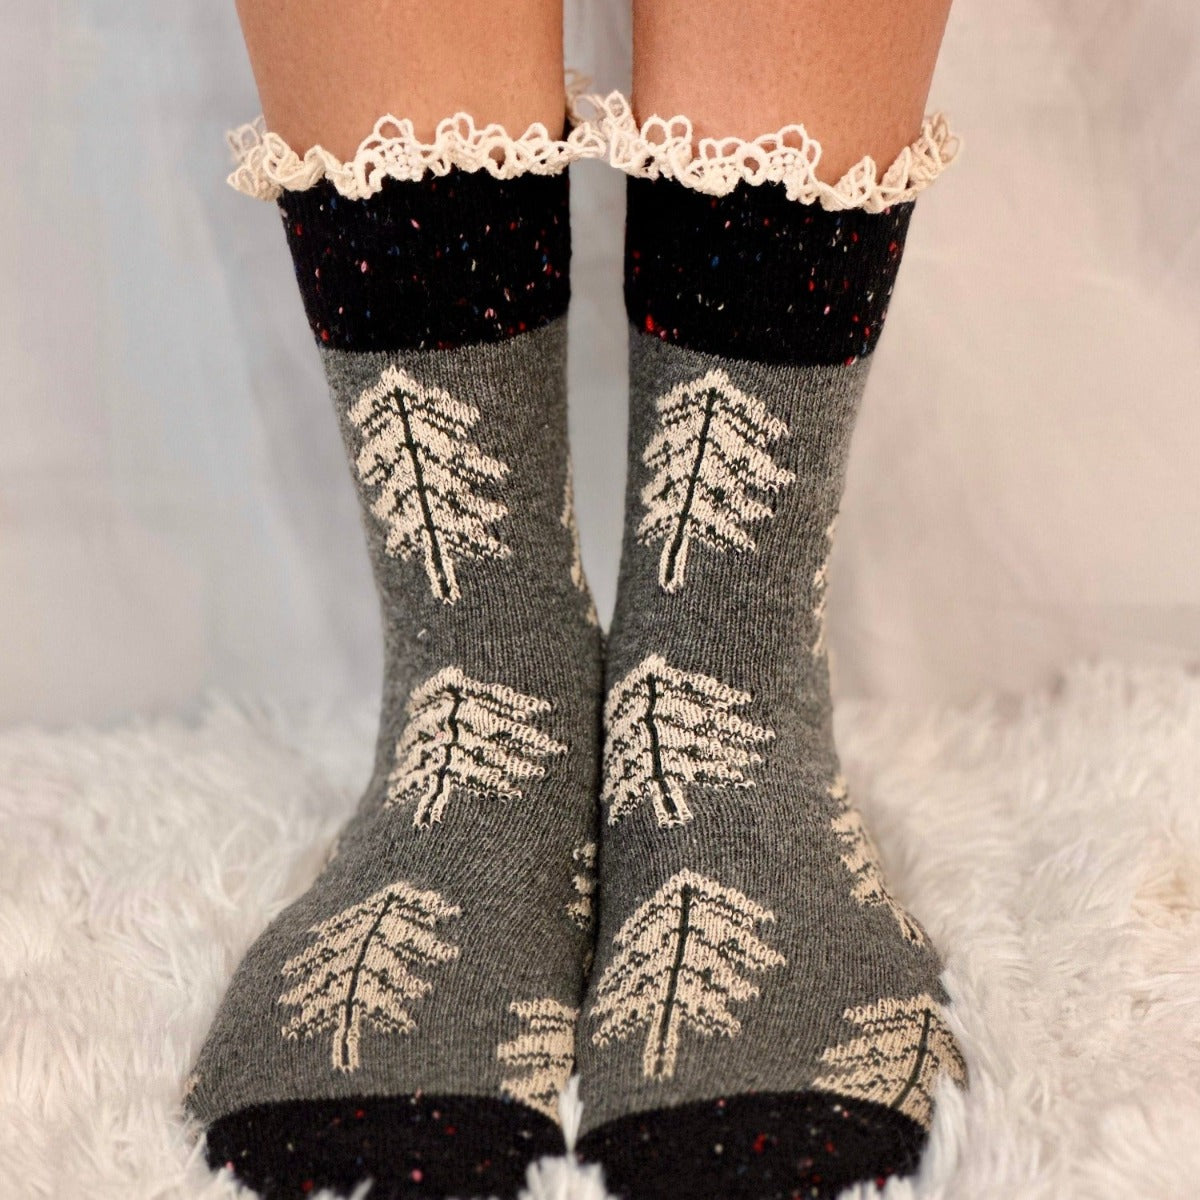 FOREST knit whimsical print crew sock - grey - Catherine Cole socks, cool fall printed socks laadies.